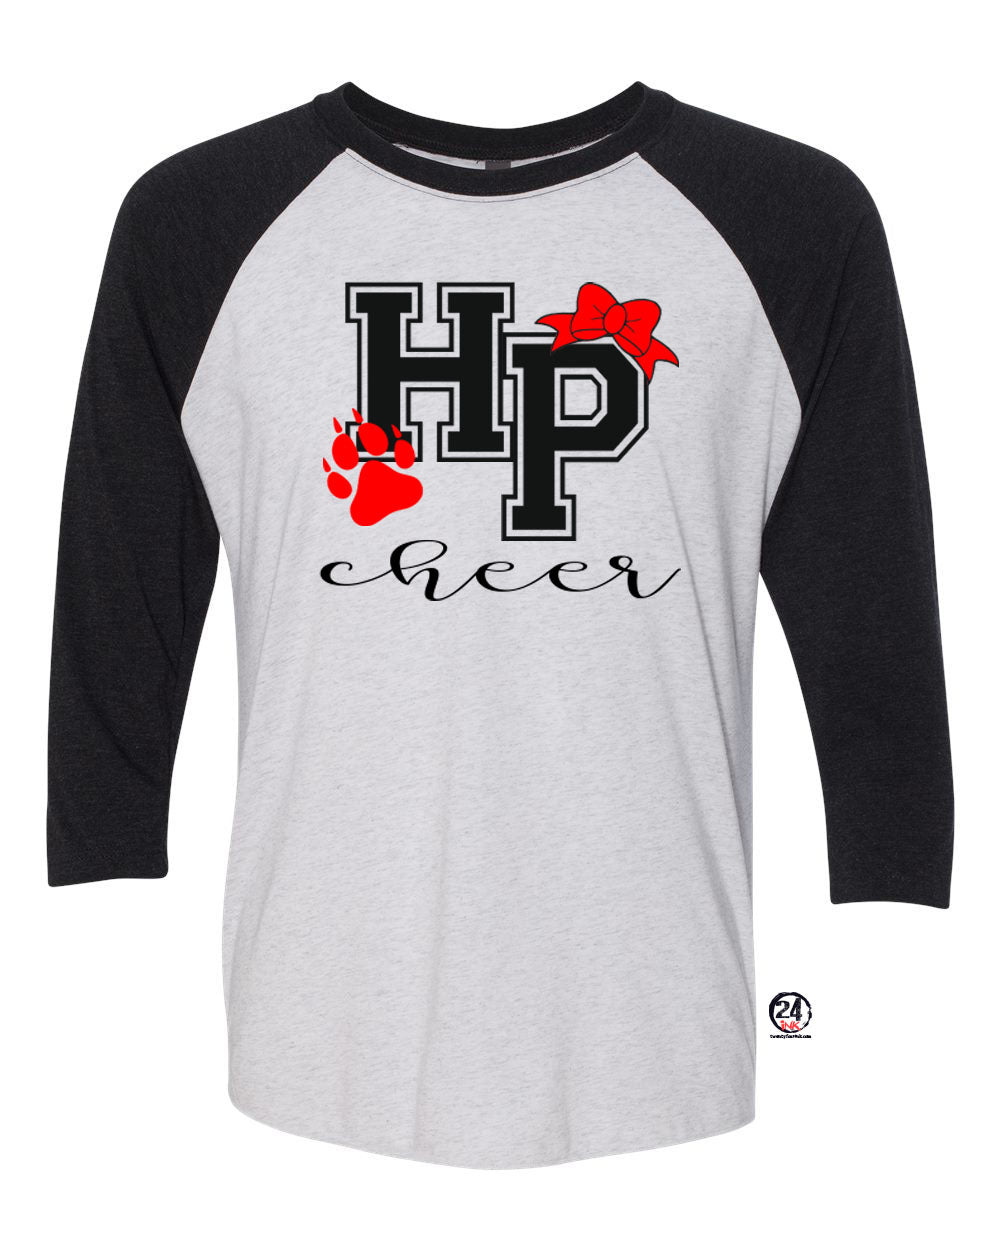 High Point Cheer design 3 raglan shirt